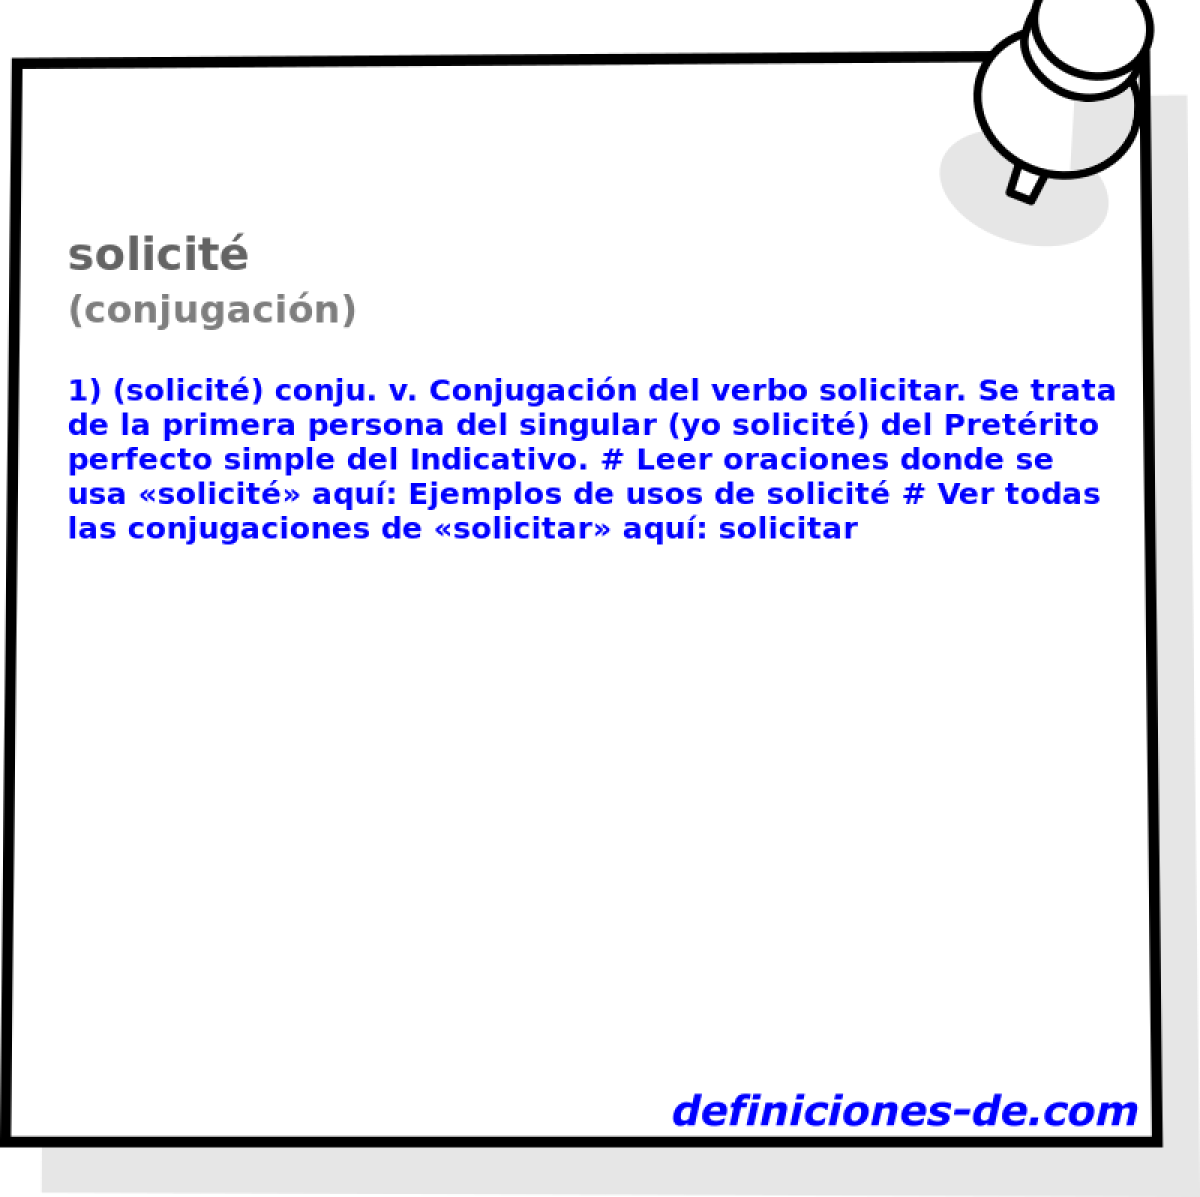 solicit (conjugacin)